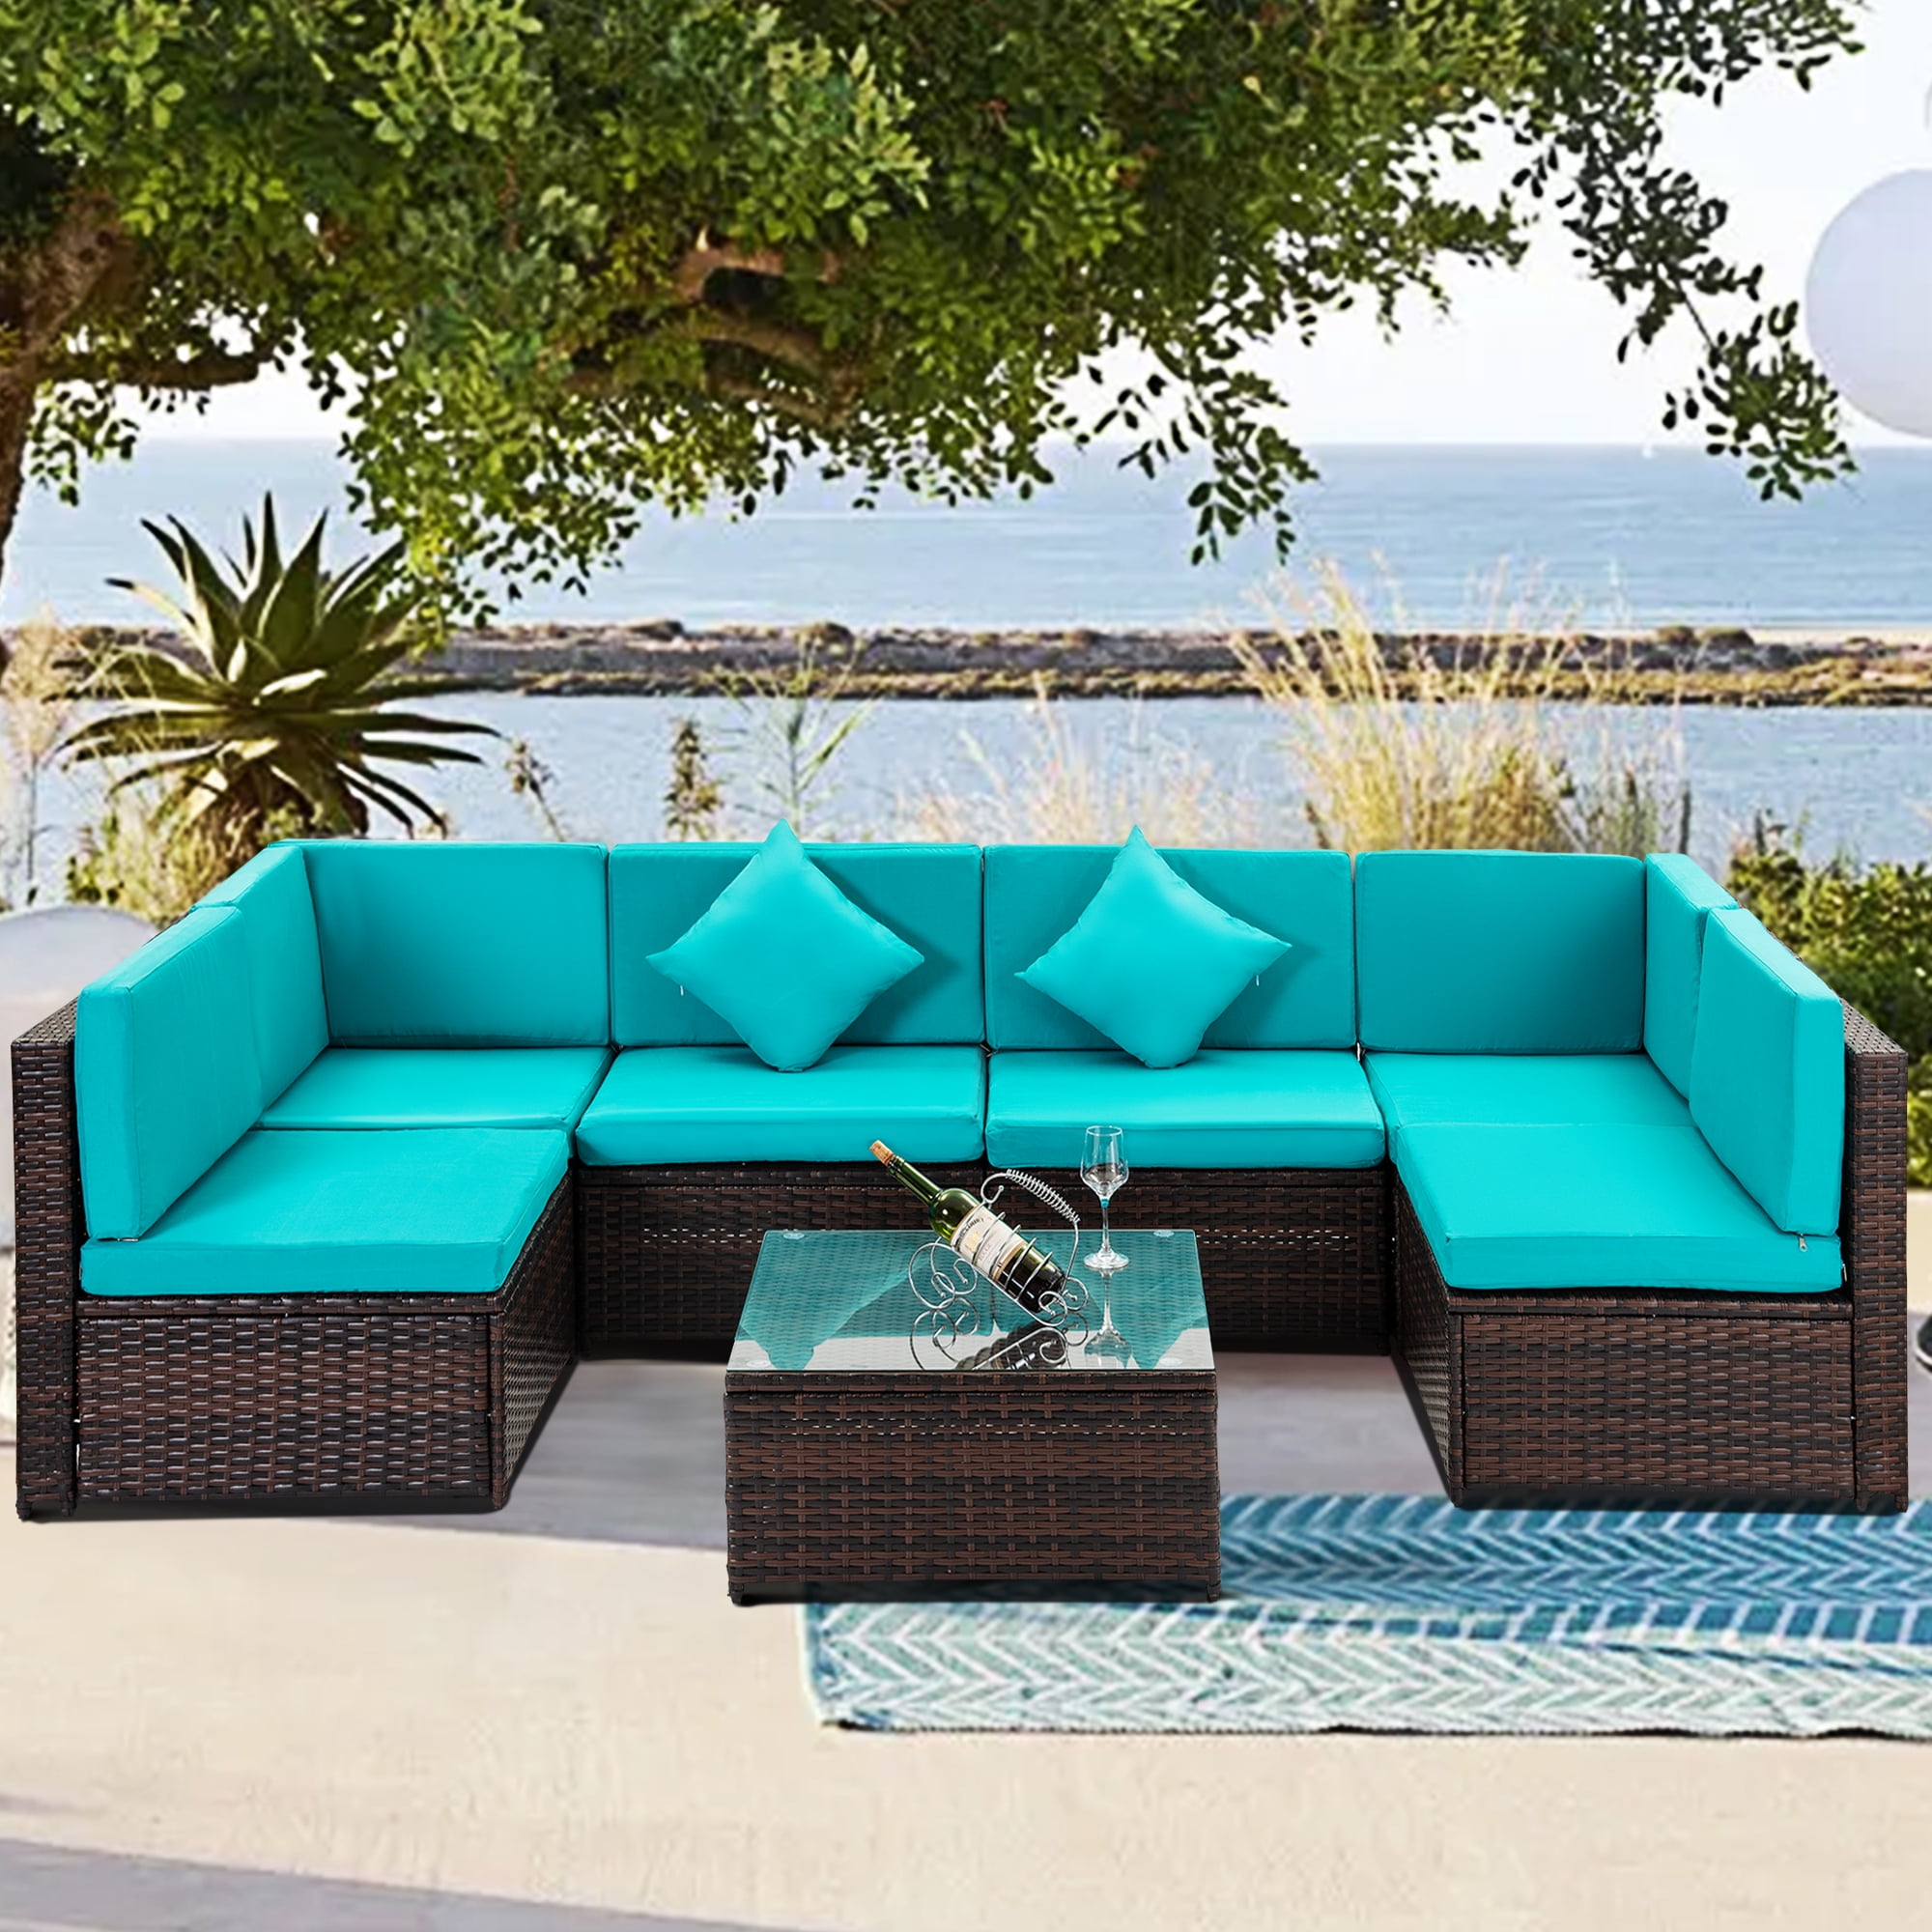 7PCS Patio Furniture Sets Clearance, Outdoor Conversation Sets w/ 6